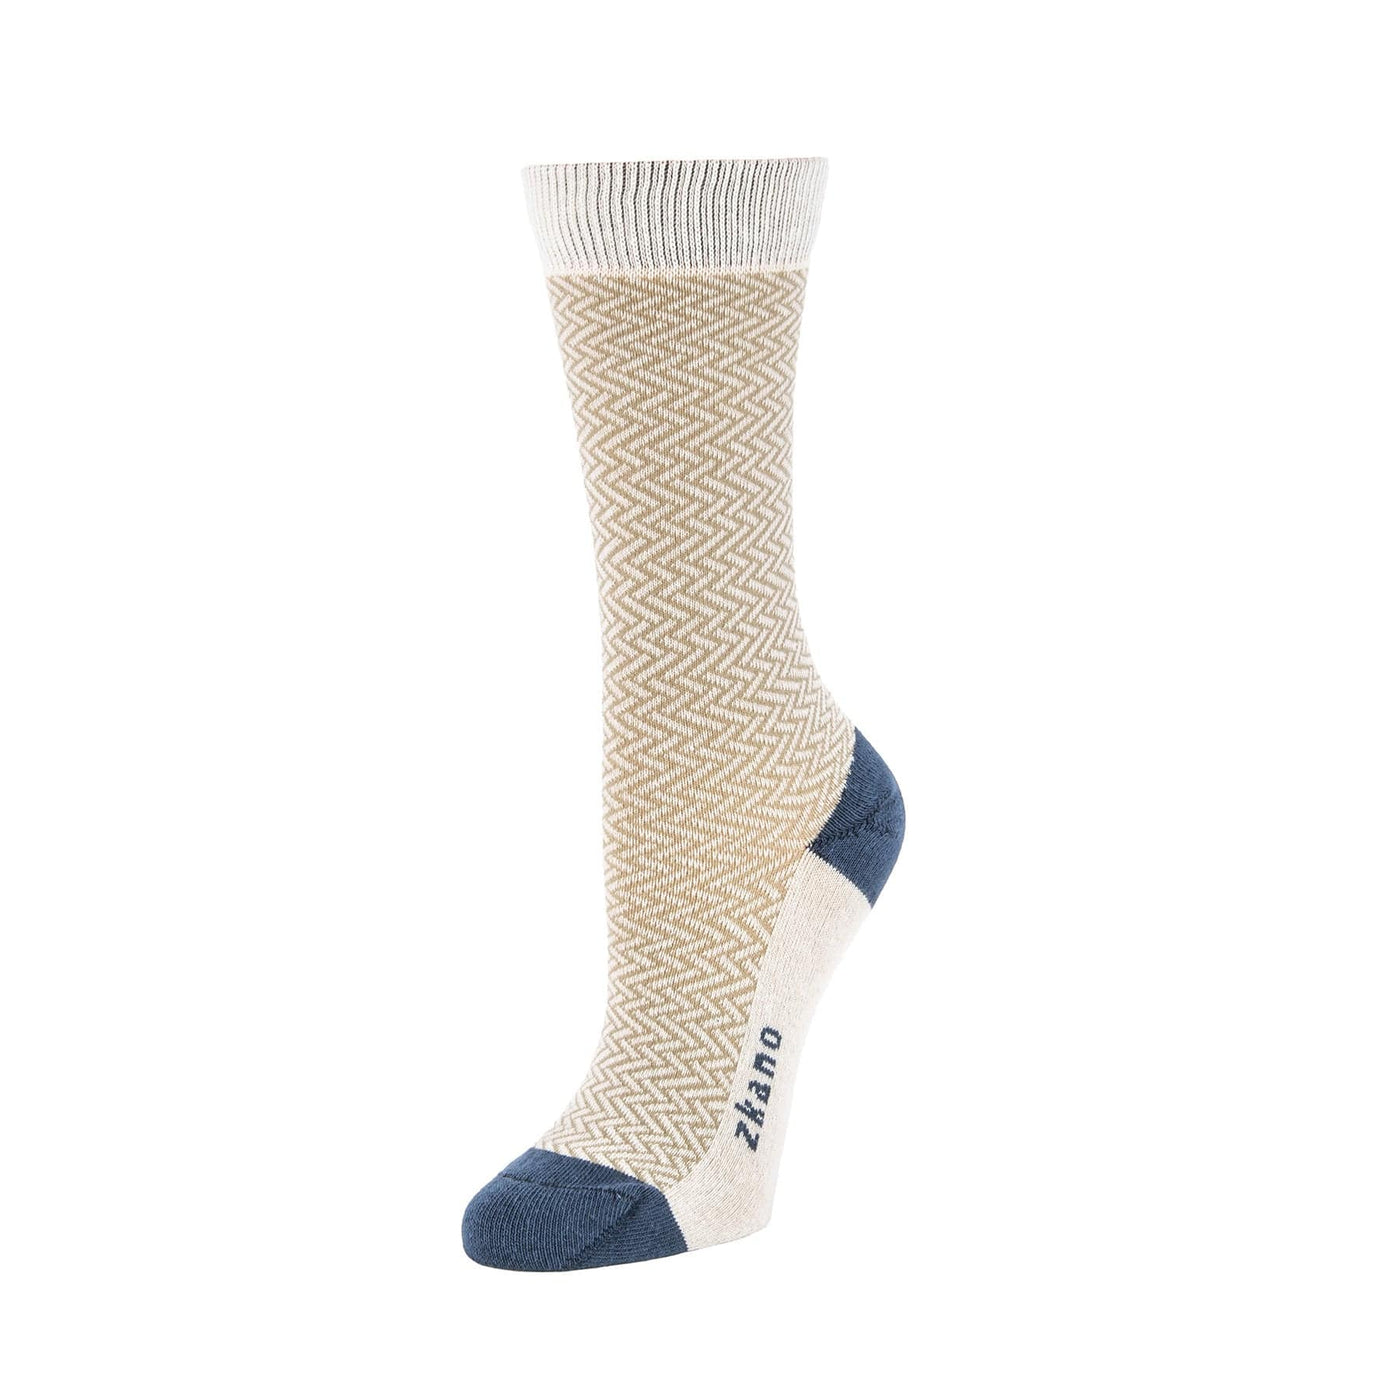 Zkano Crew Medium Basketweave - Textured Organic Cotton Crew Socks - Wheat organic-socks-made-in-usa